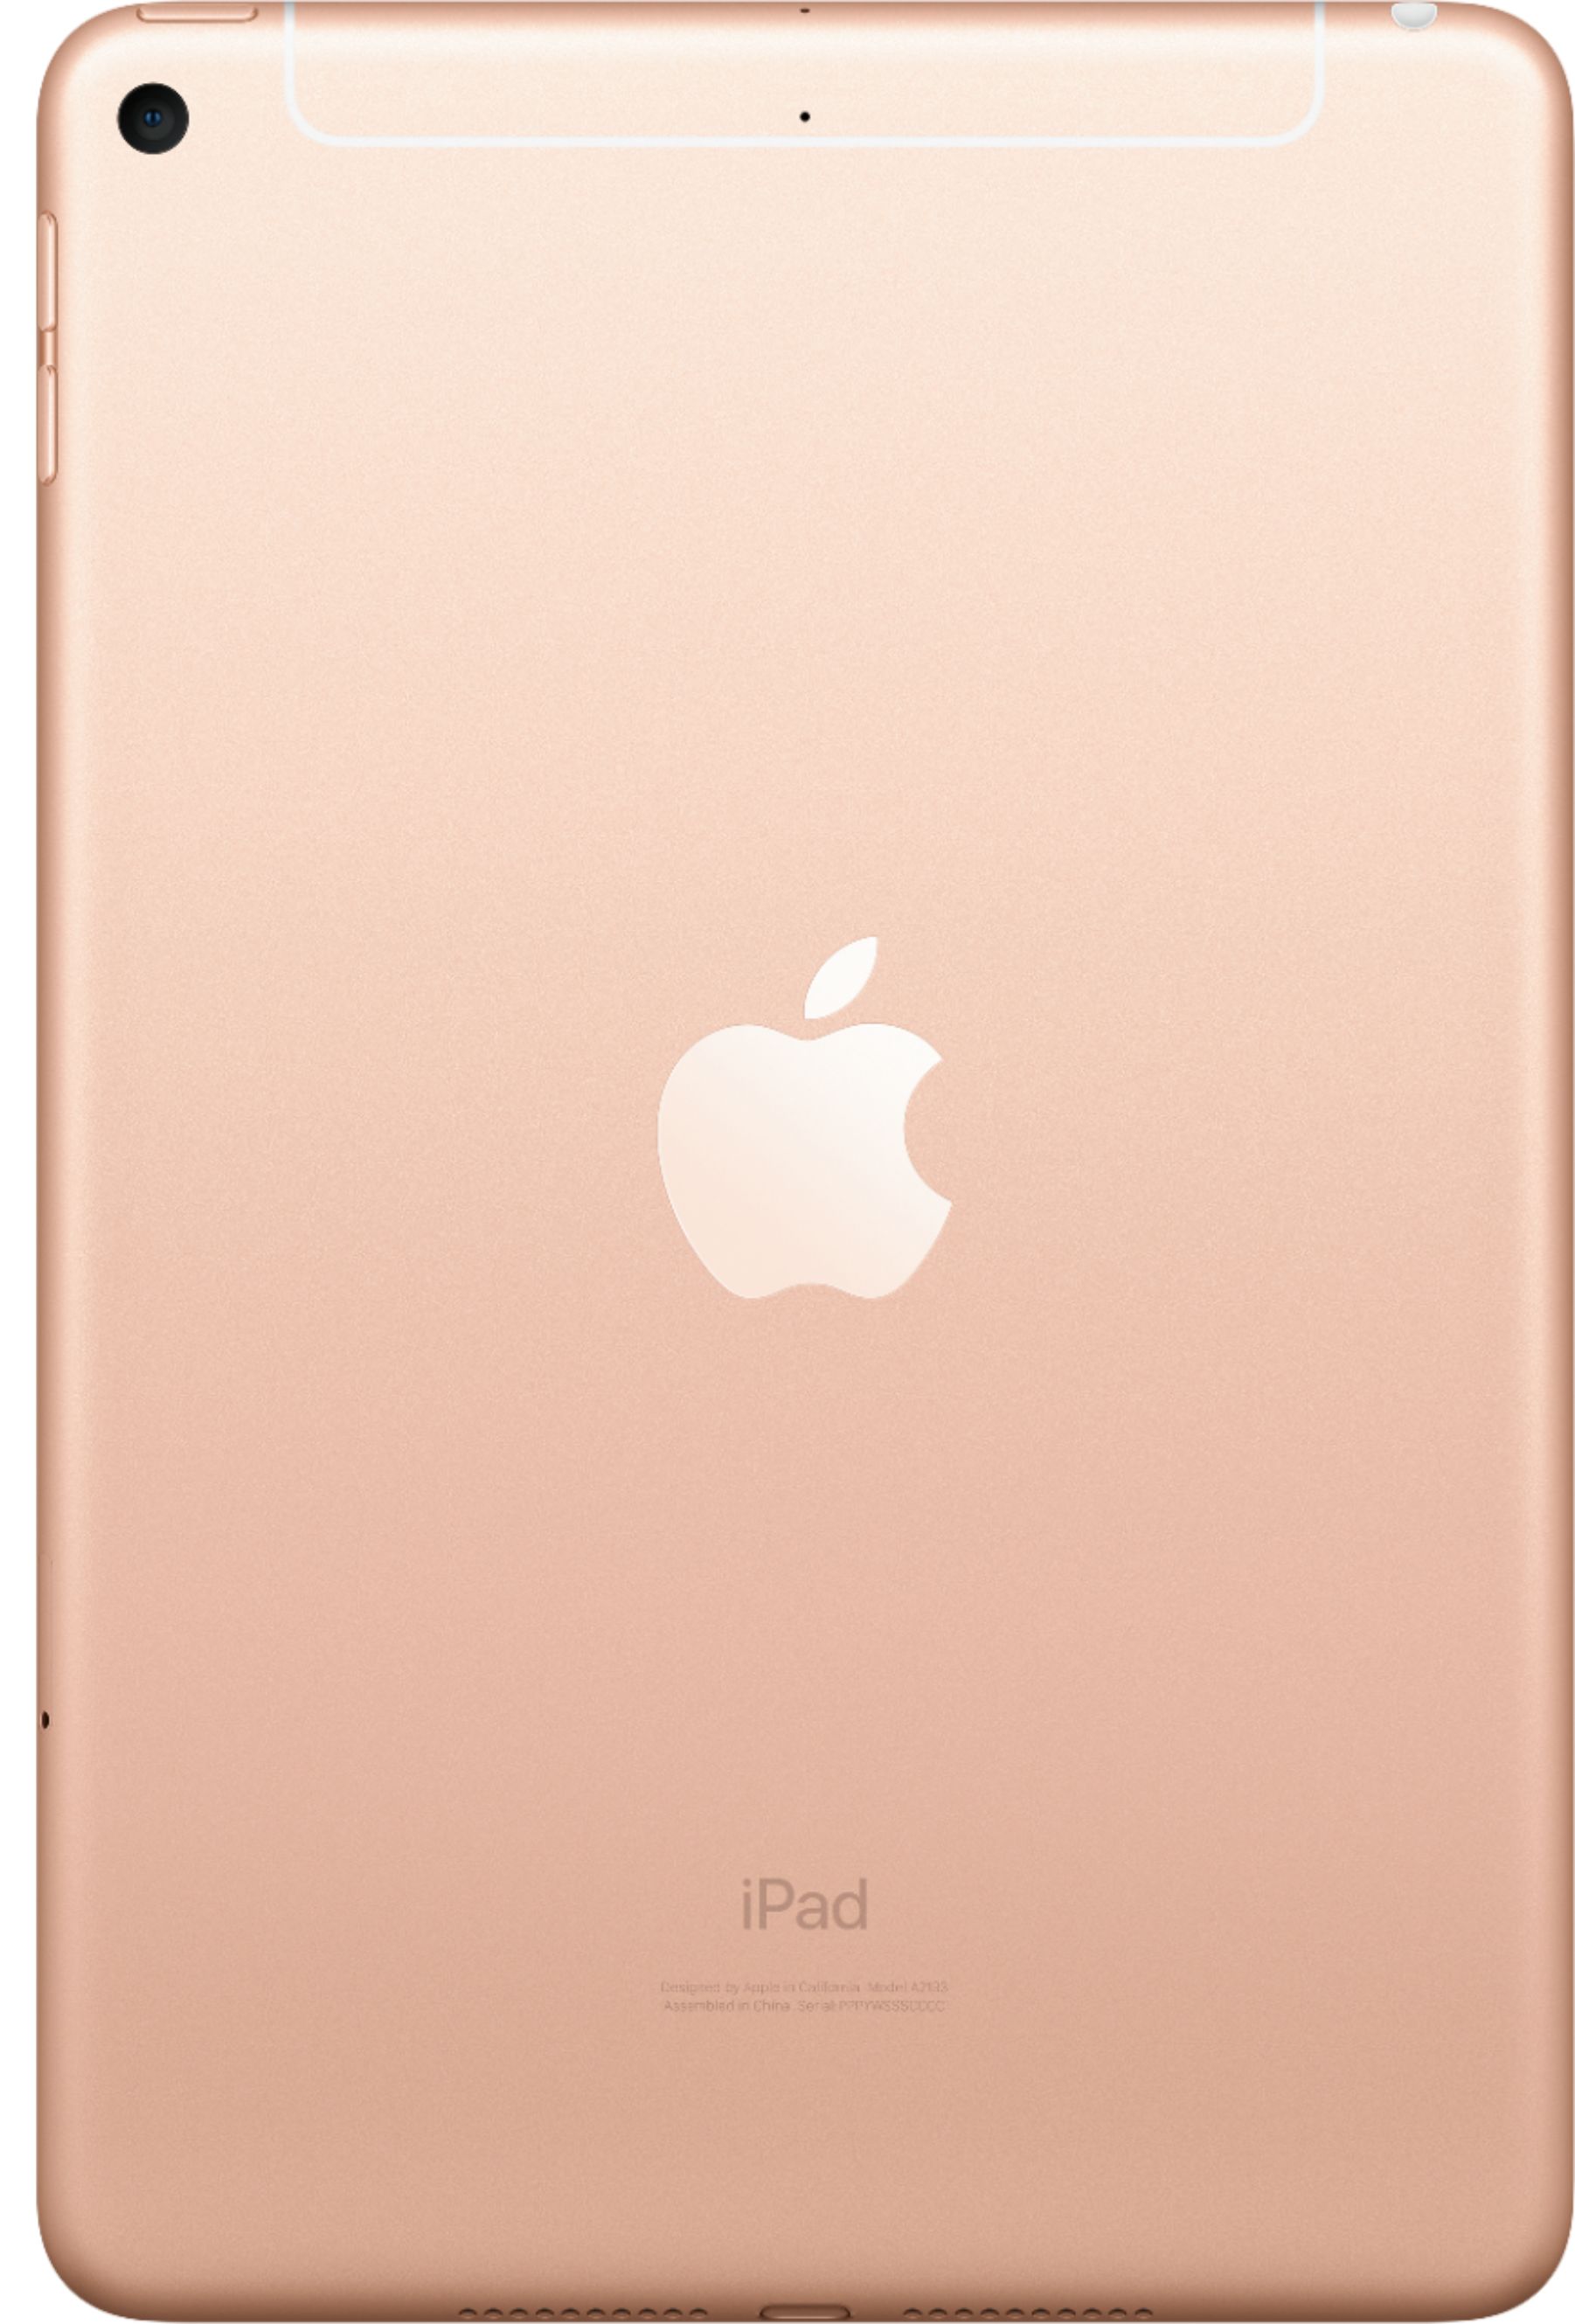 Back View: Apple - 7.9-Inch iPad mini (5th Generation) with Wi-Fi + Cellular - 256GB - Gold (Unlocked)